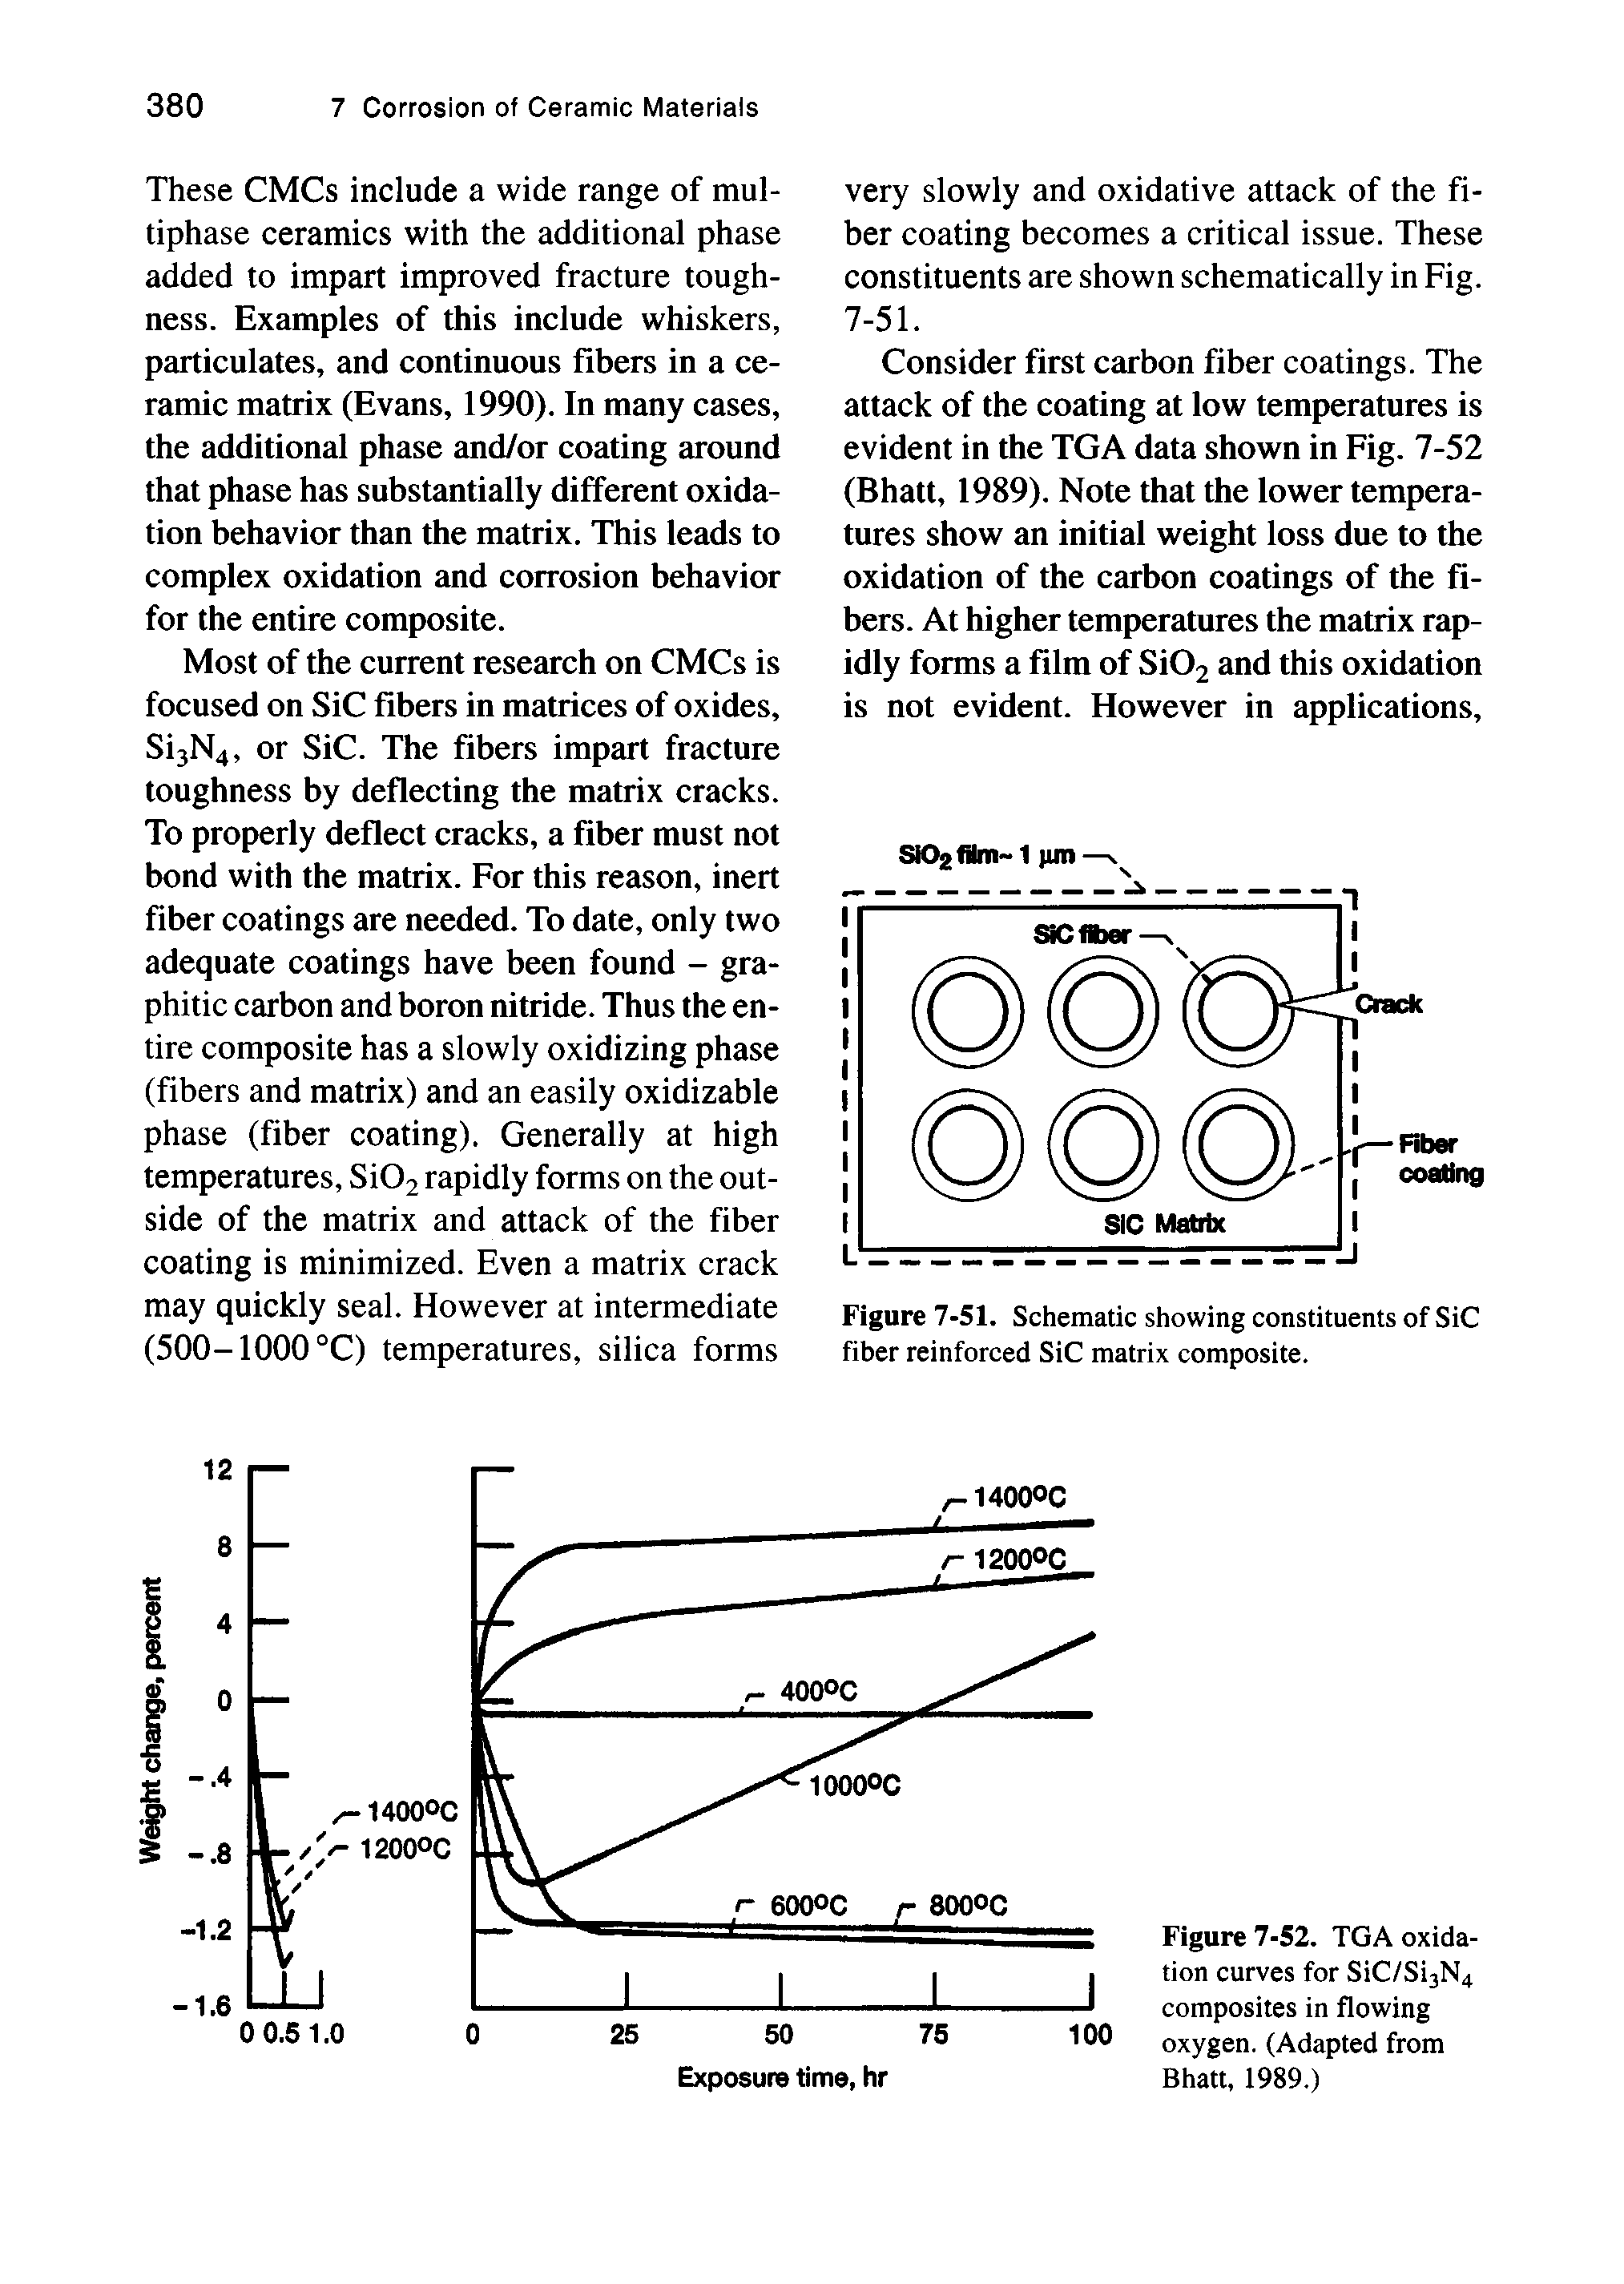 Figure 7-51. Schematic showing constituents of SiC fiber reinforced SiC matrix composite.